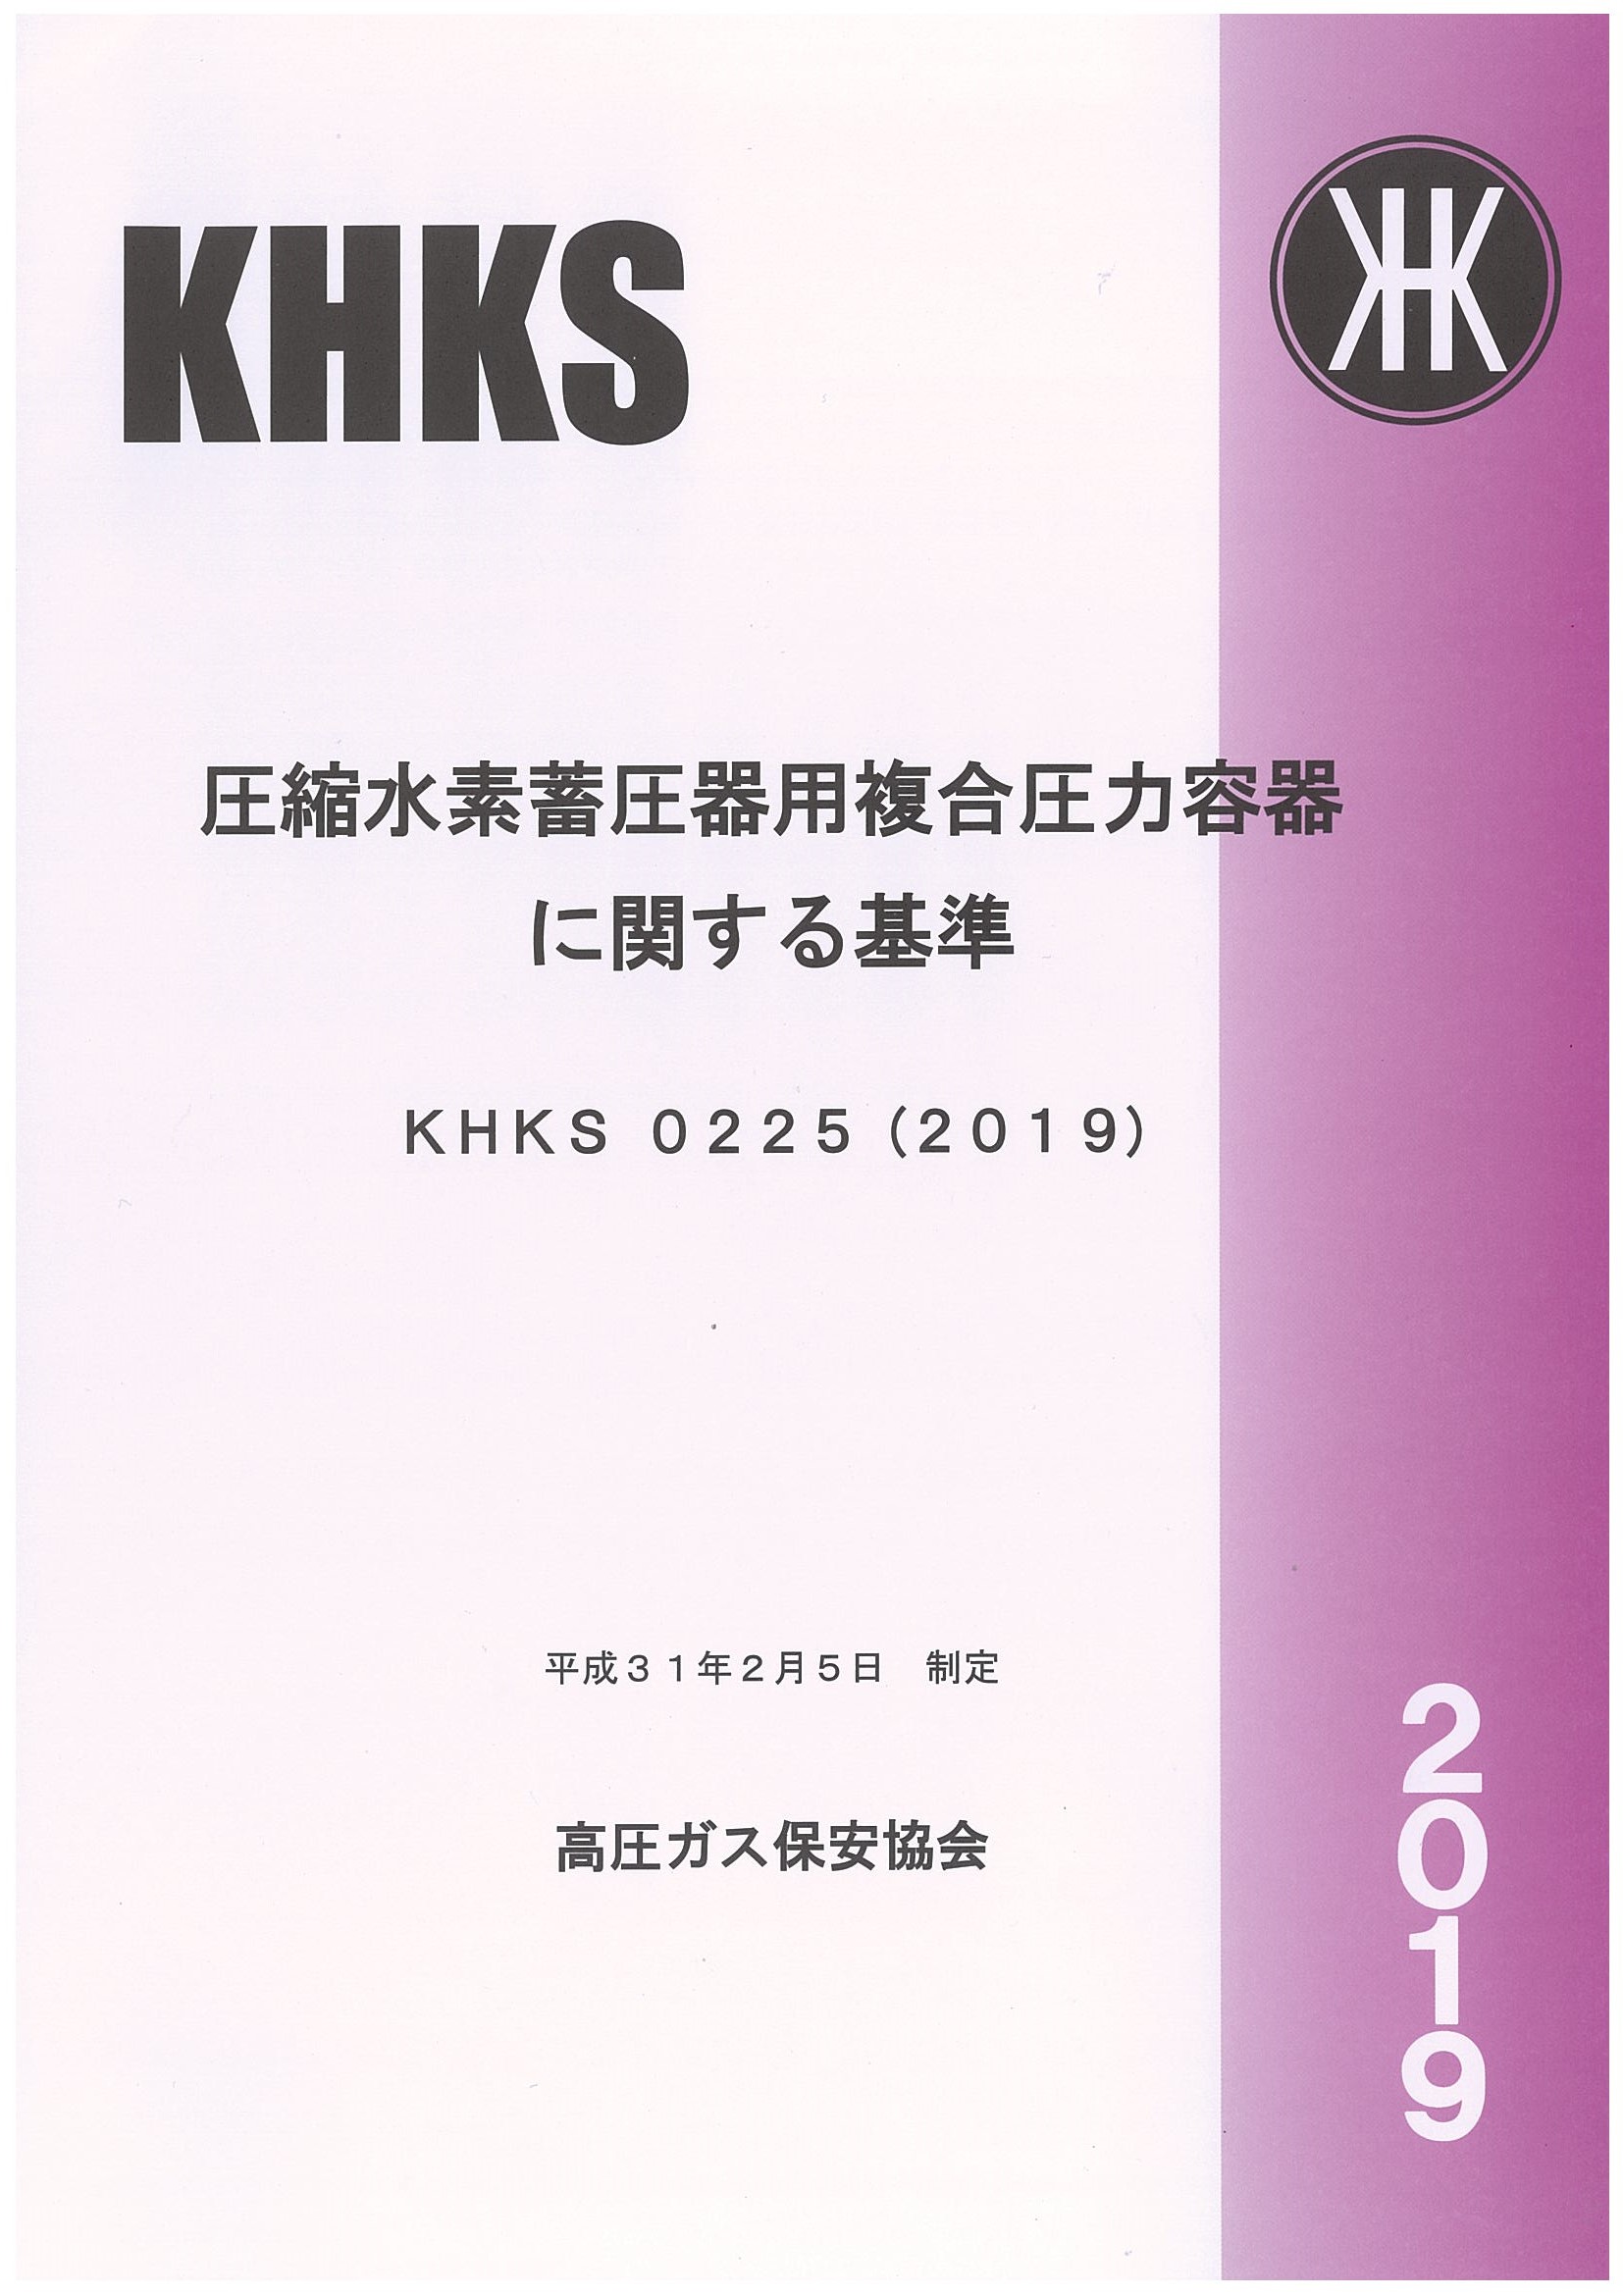 KHKS 0225 2019 圧縮水素蓄圧器用複合圧力容器に関する基準